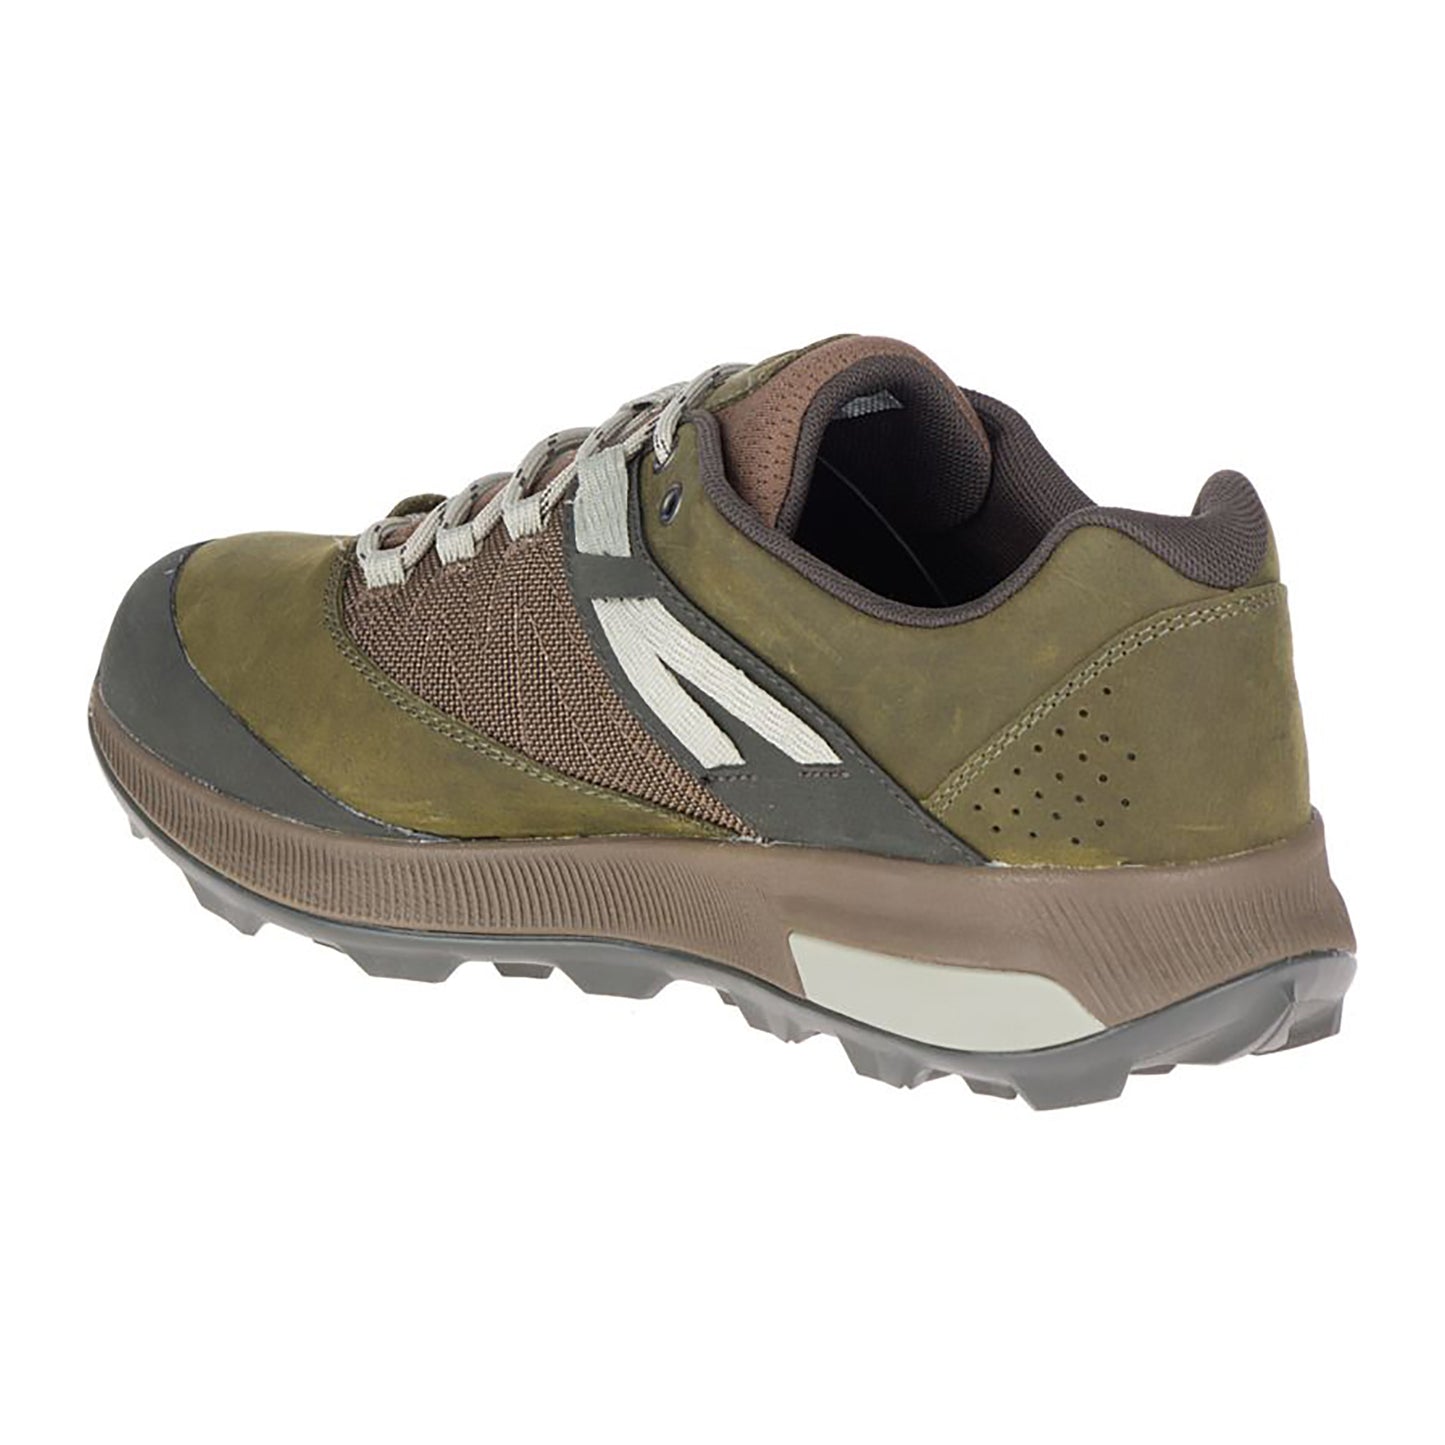 Men's Zion Waterproof Trail Shoe - Dark Olive - Regular (D)